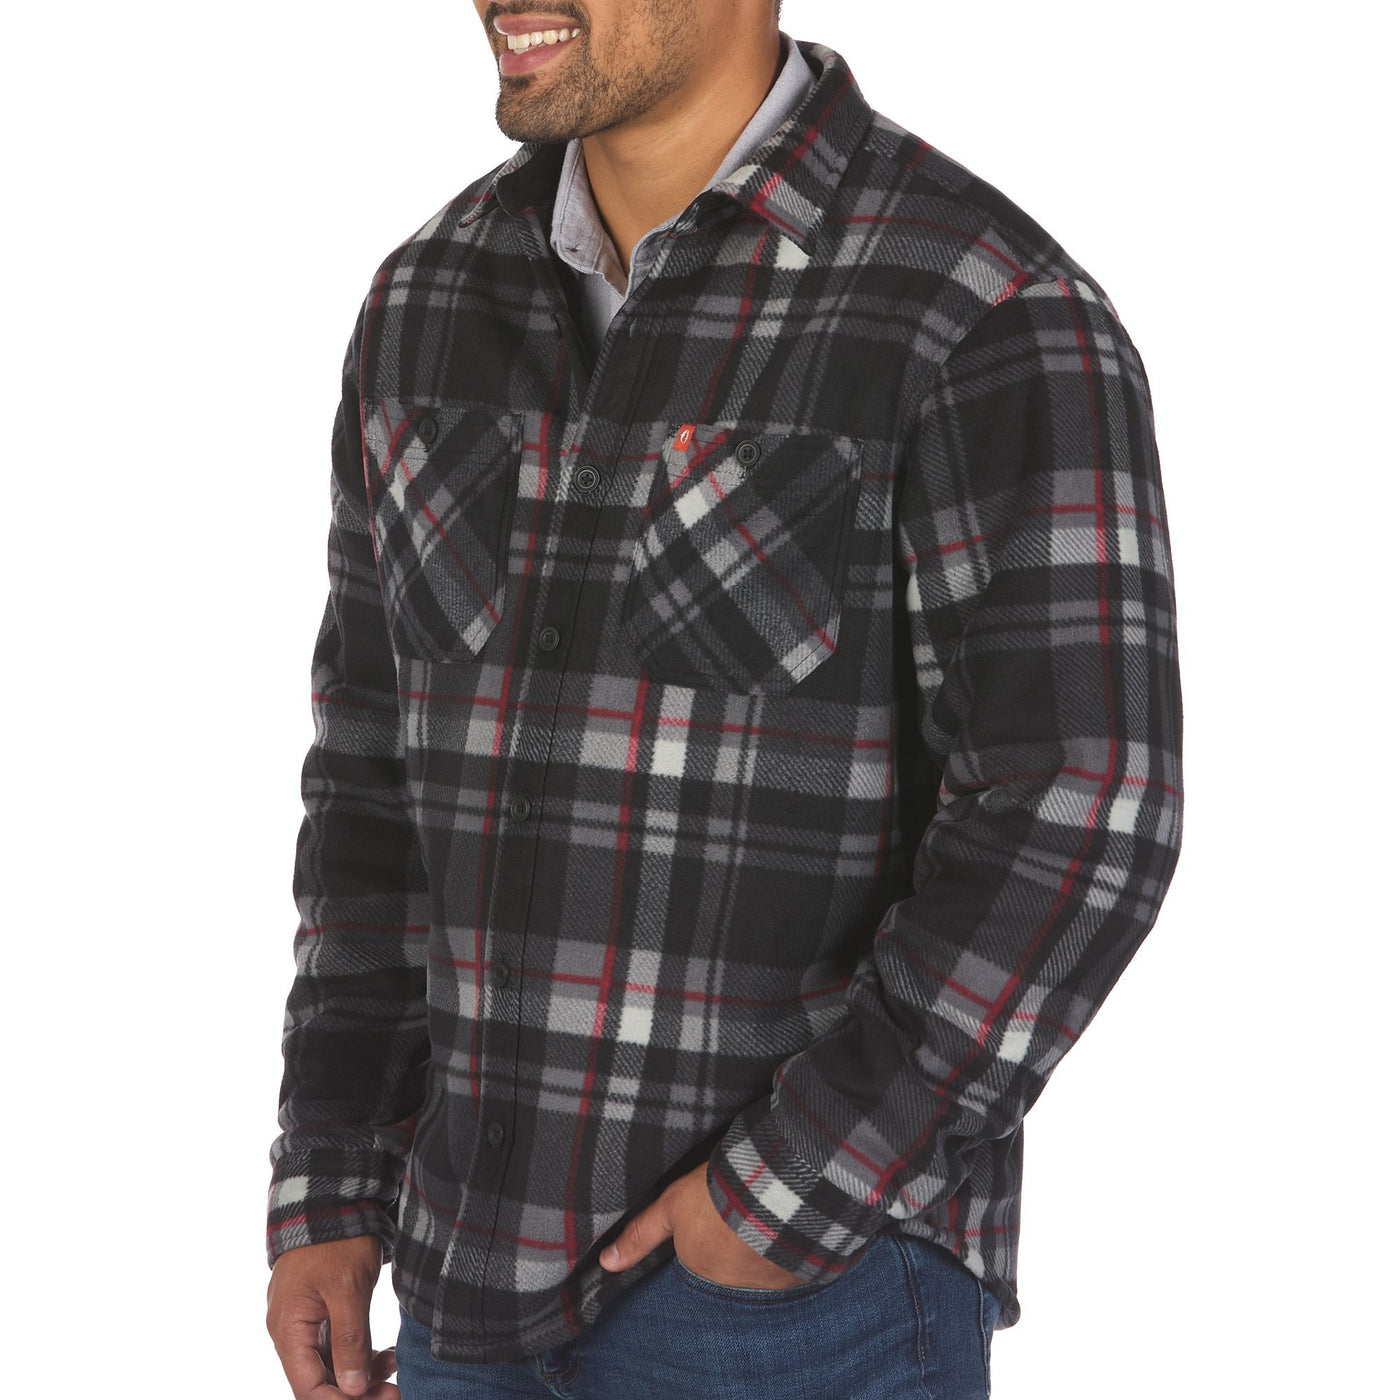 EB228 Men's Eddie Bauer Fleece Lined Shirt Jacket